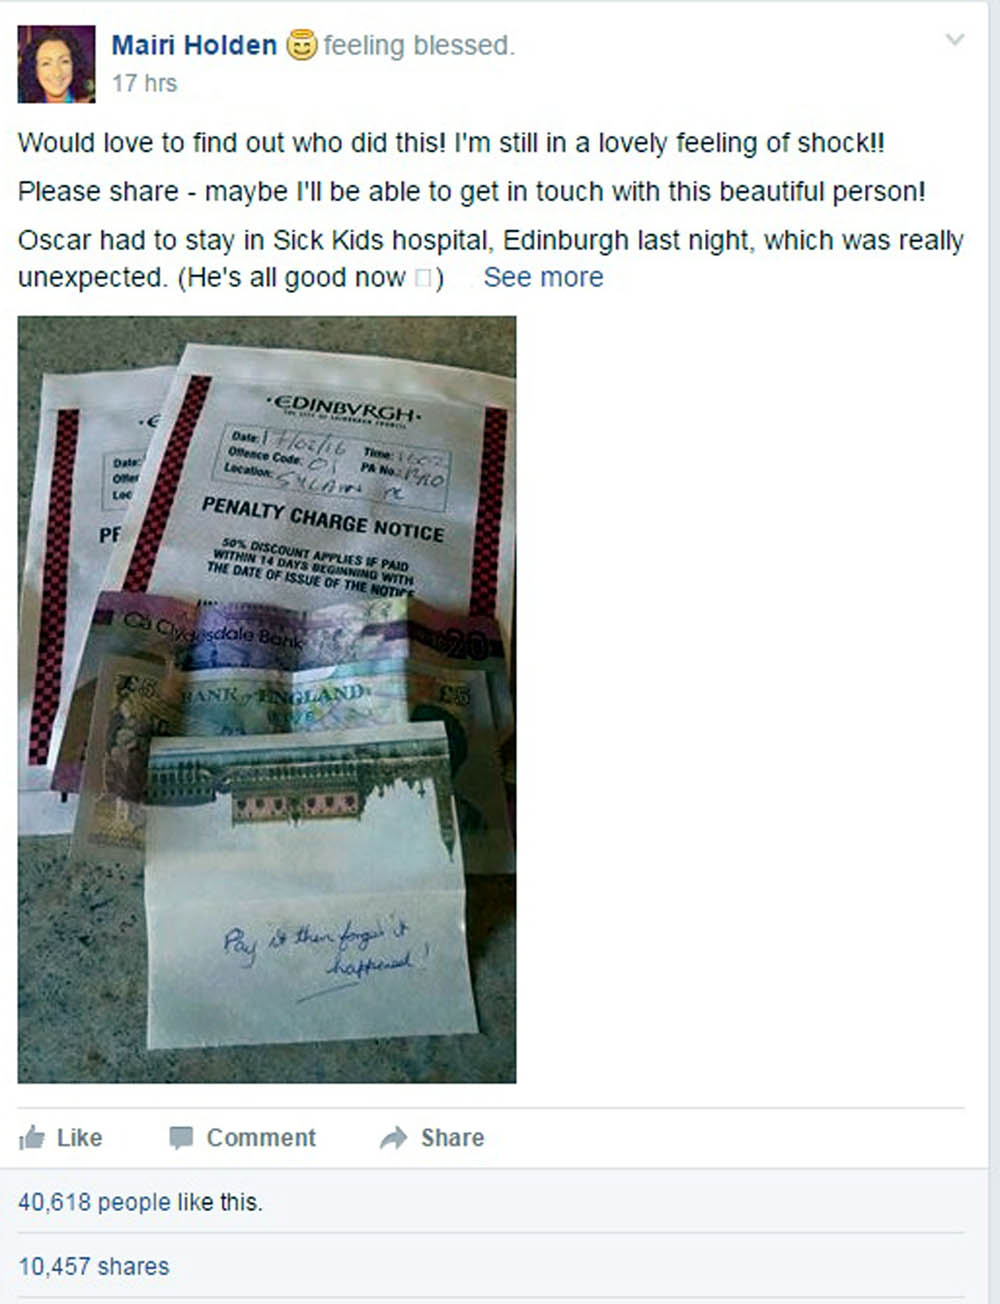 The original post where Mairi praises the good Samaritan who left money for the £25 fine. 